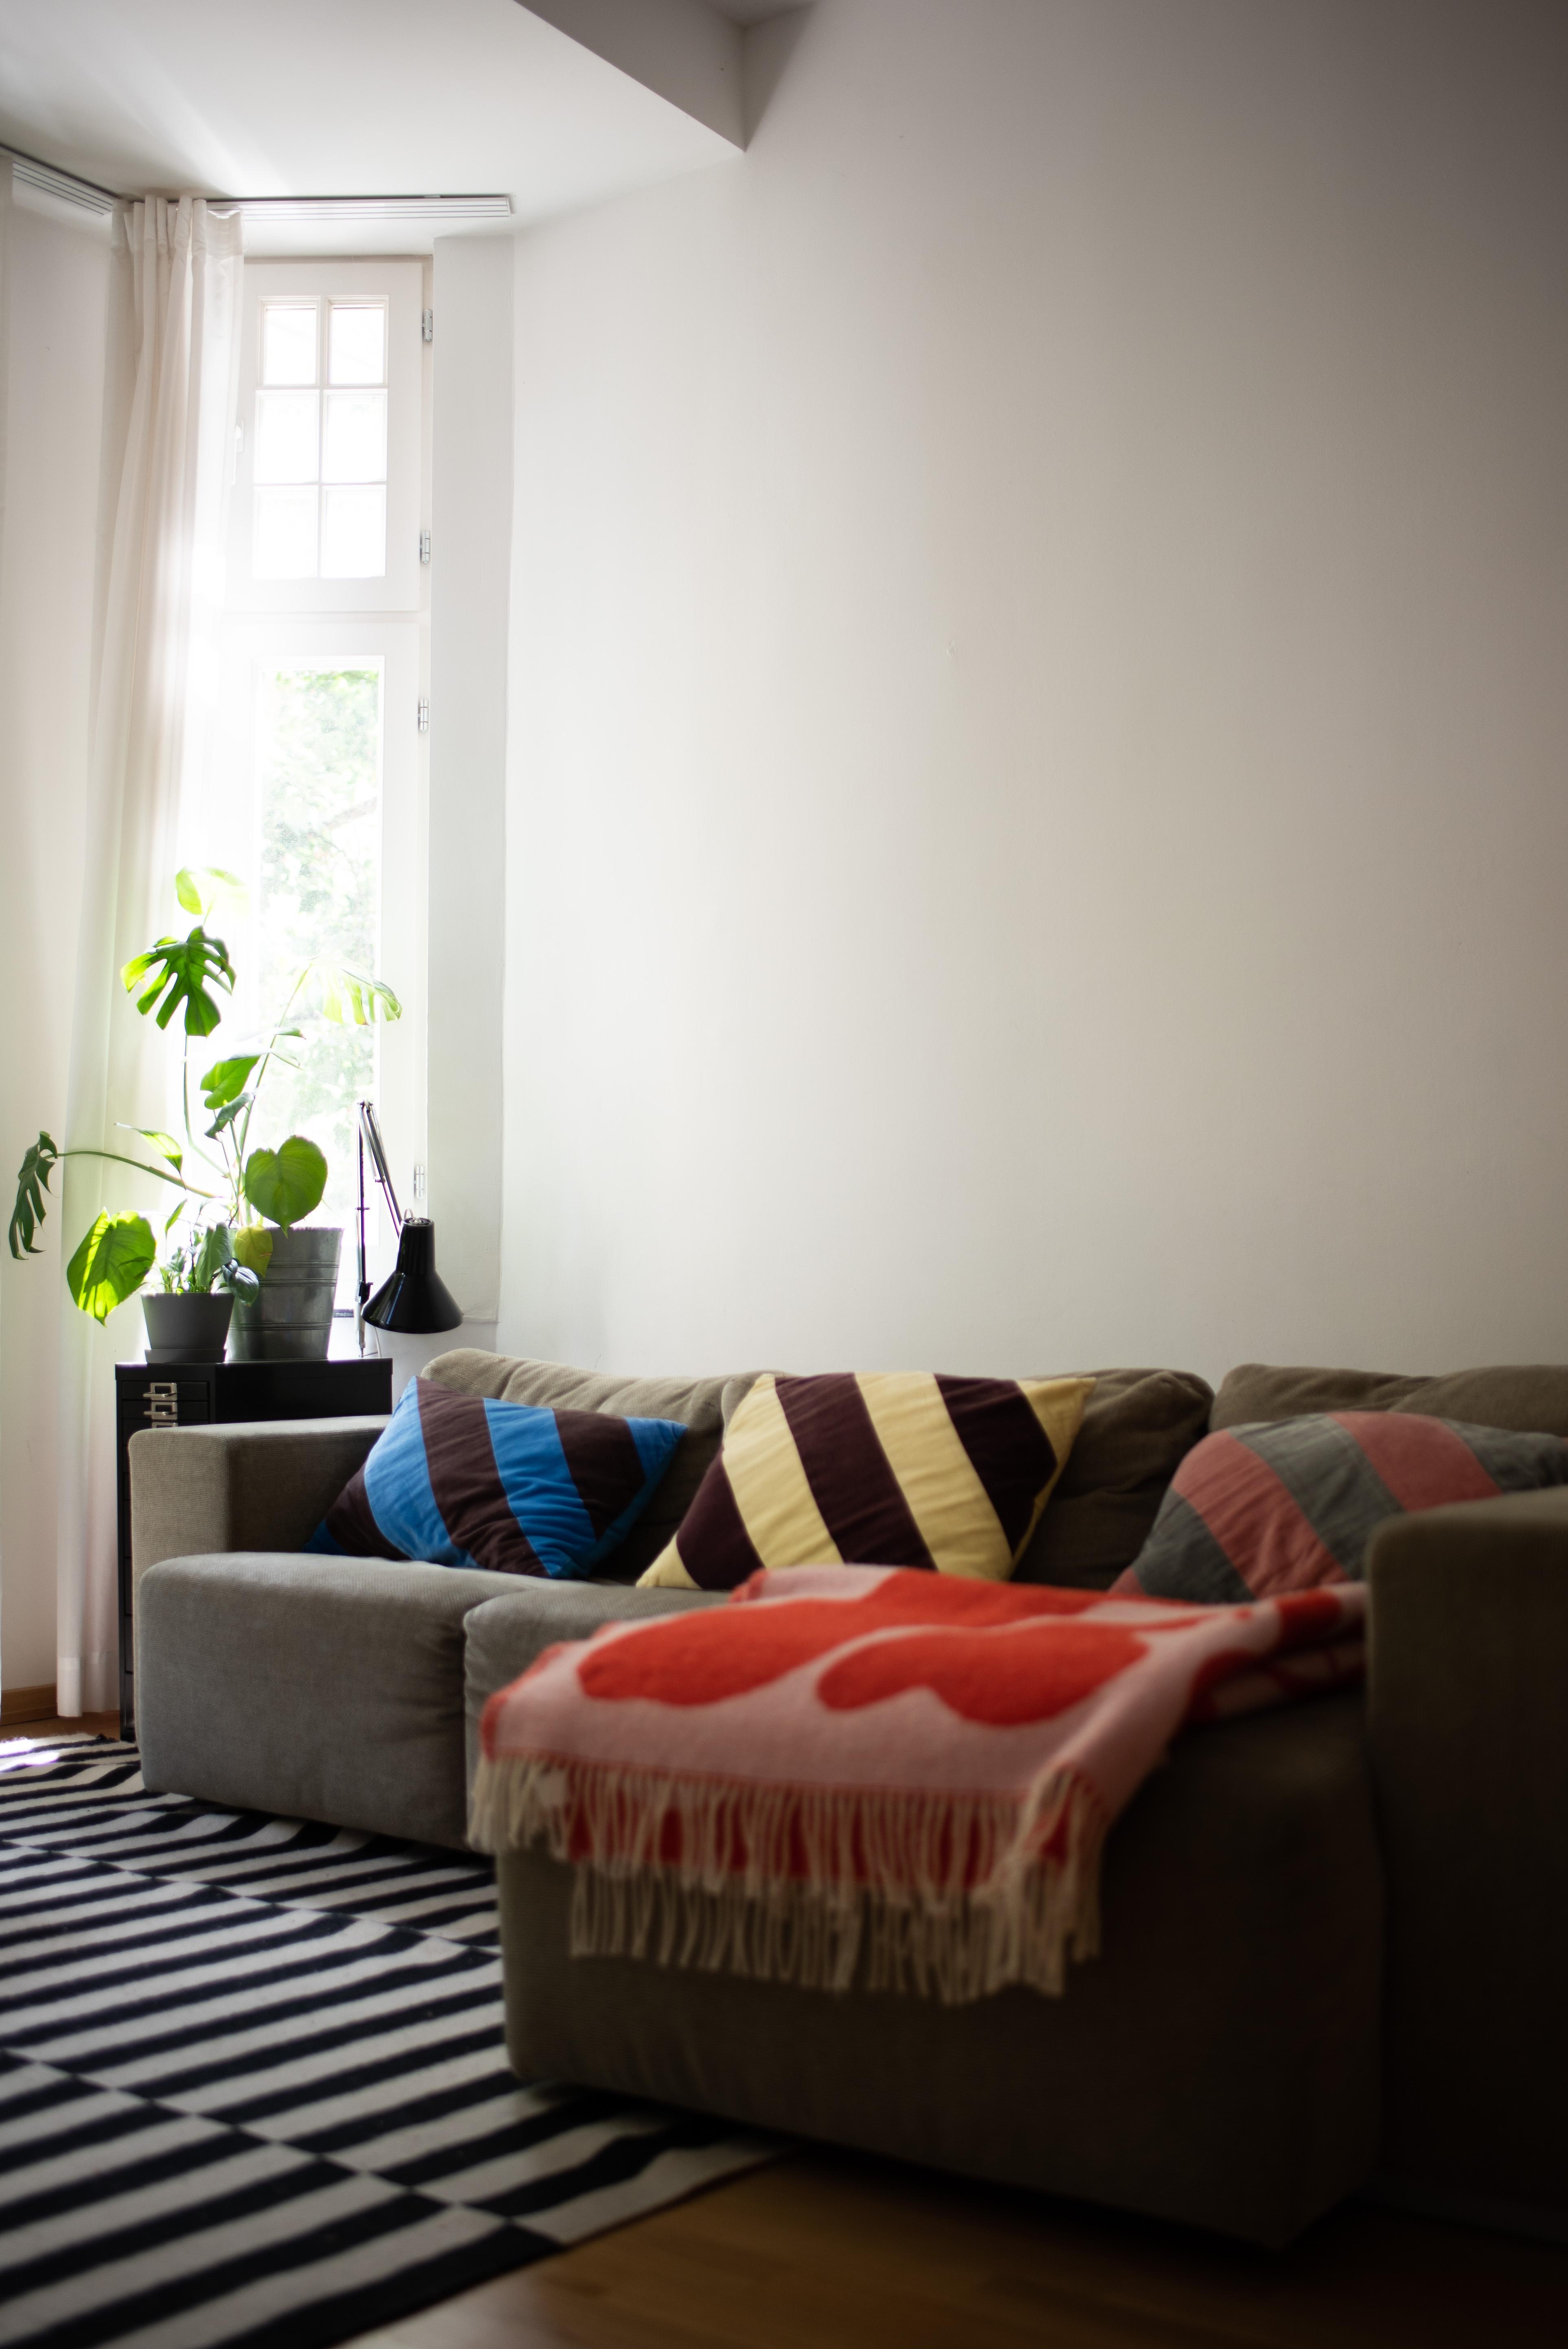 Grüße vom Sofa! #sofa #wohnzimmer #interior #cozyplace #cozycorner #altbau #colourful